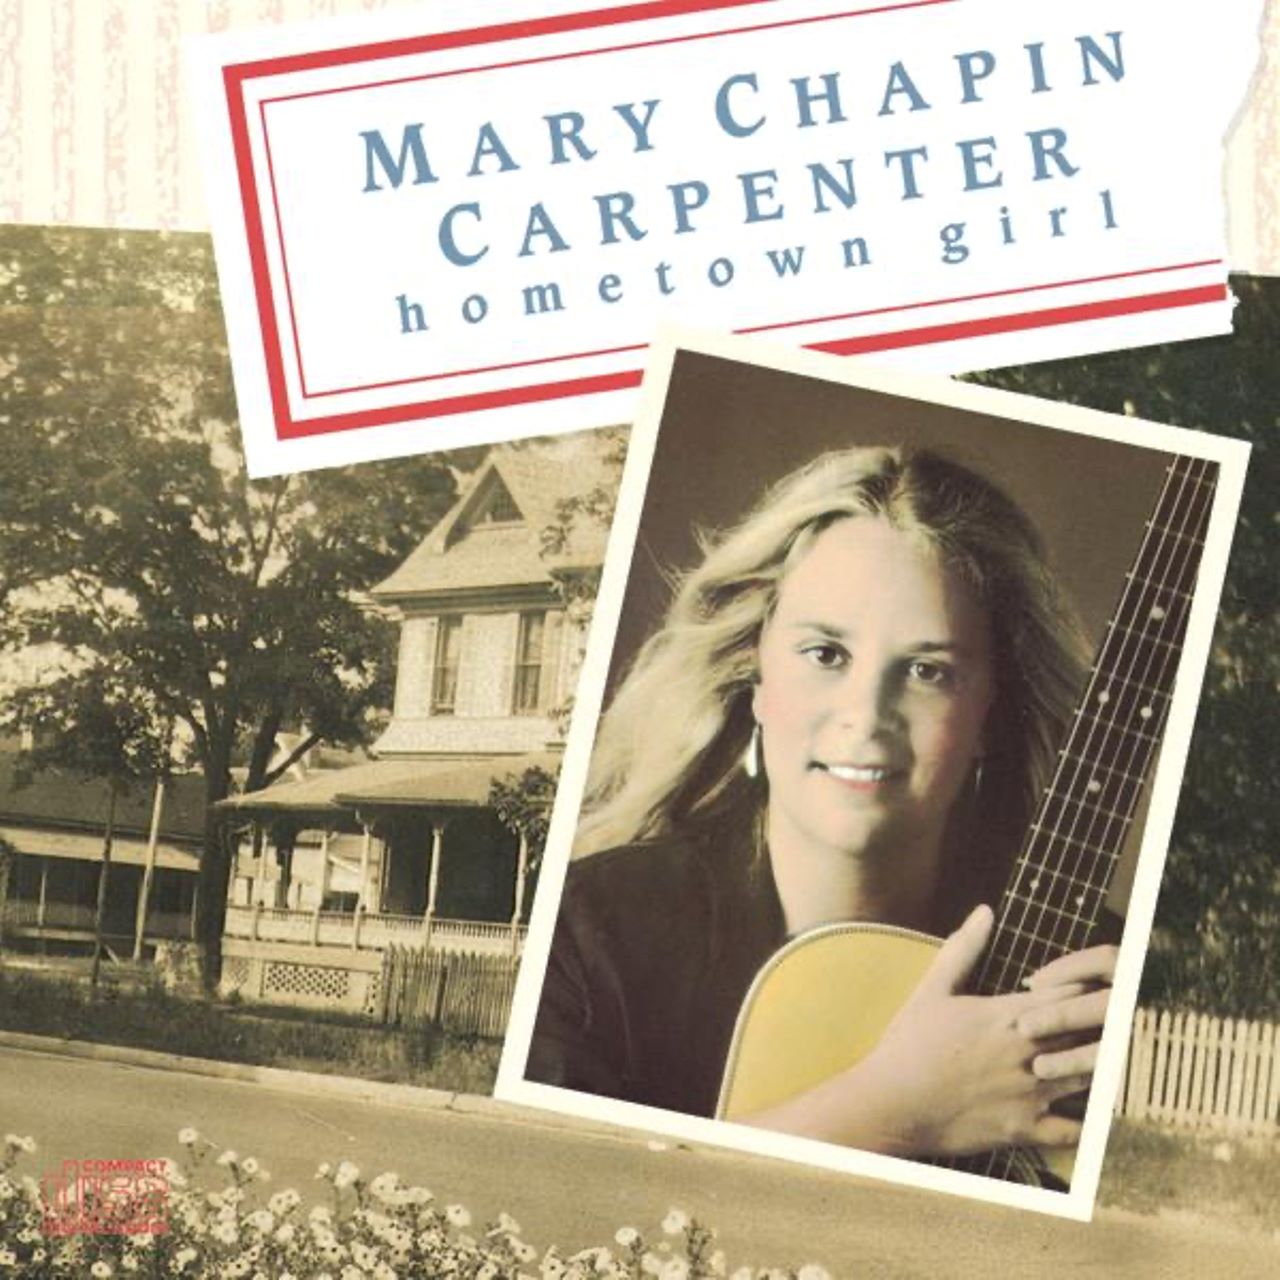 Mary Chapin Carpenter - Hometown Girl cover album